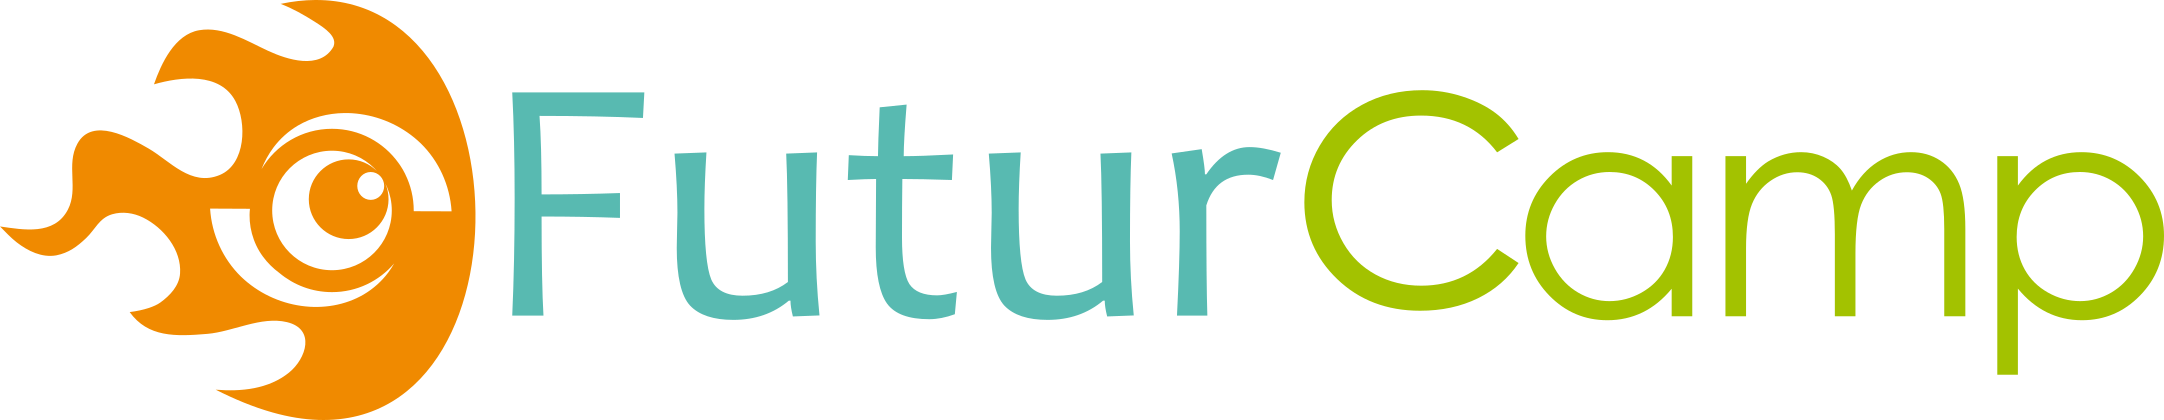 logo_futurcamp_v2